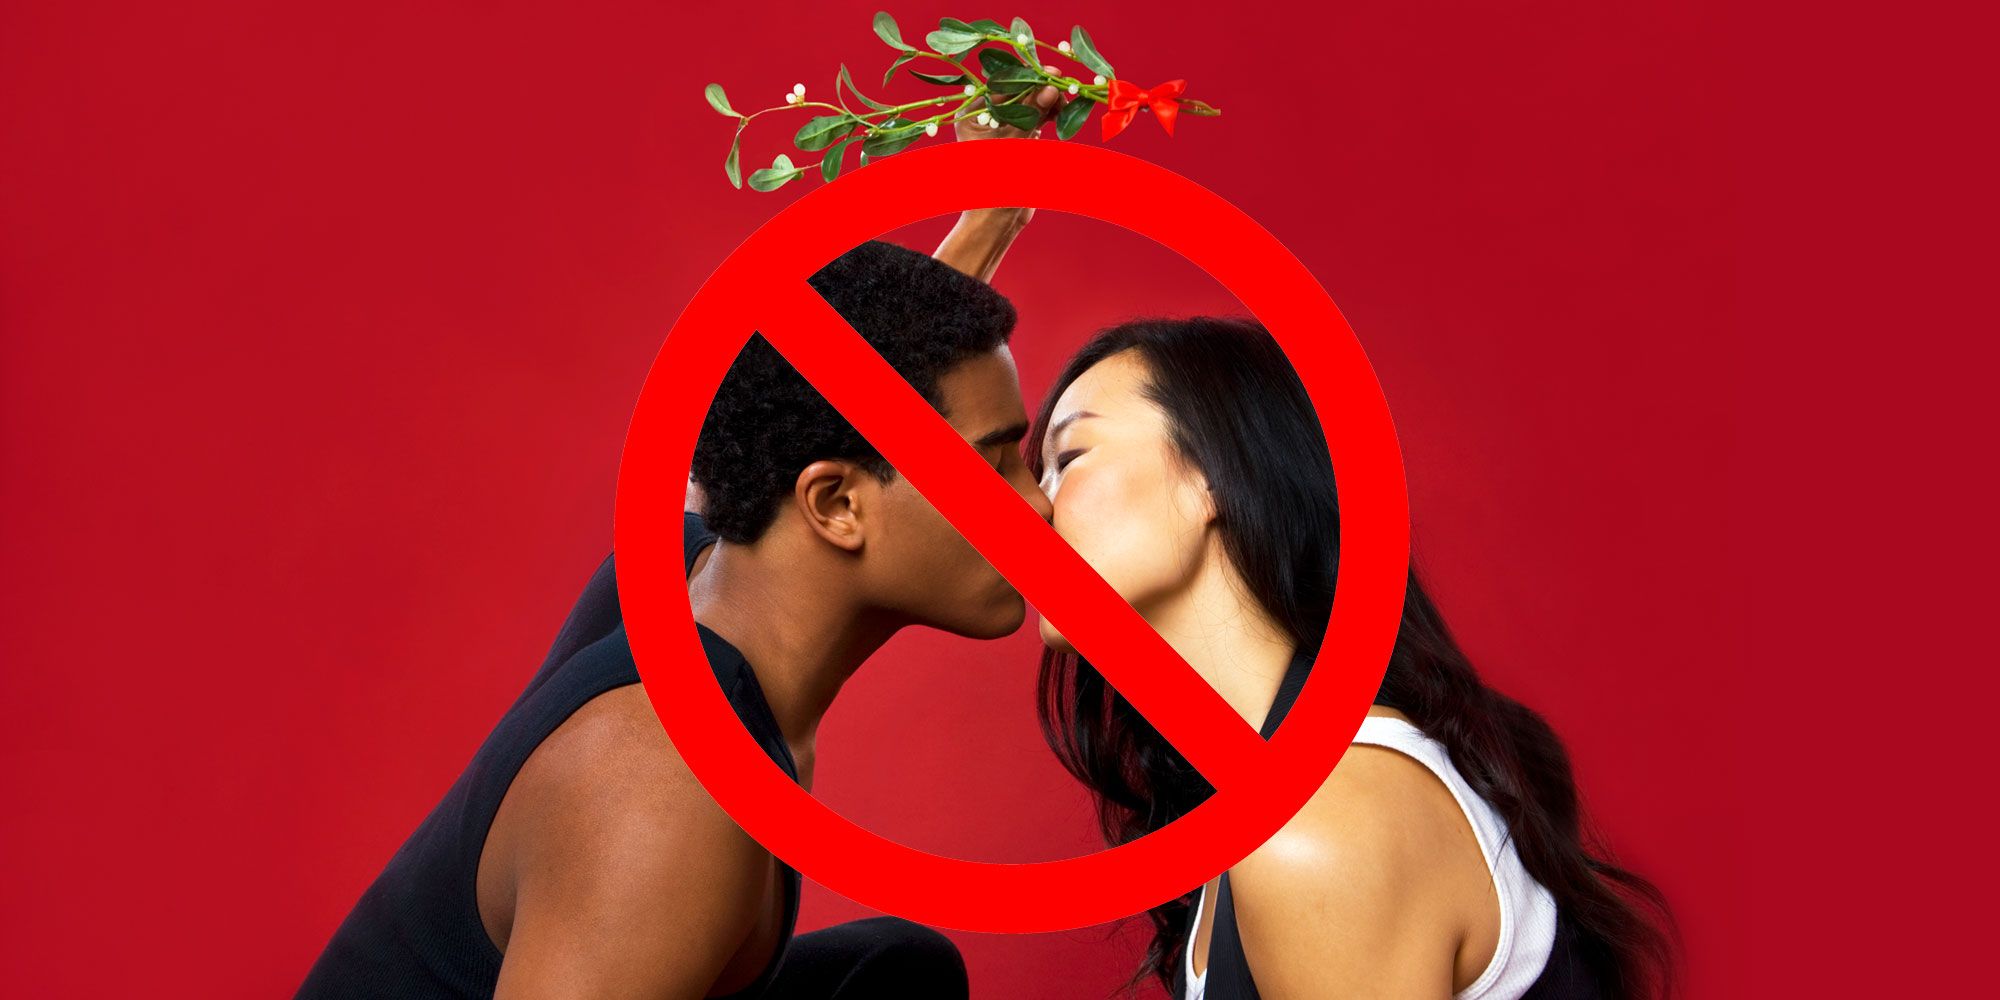 Why Do We Kiss Under the Mistletoe?